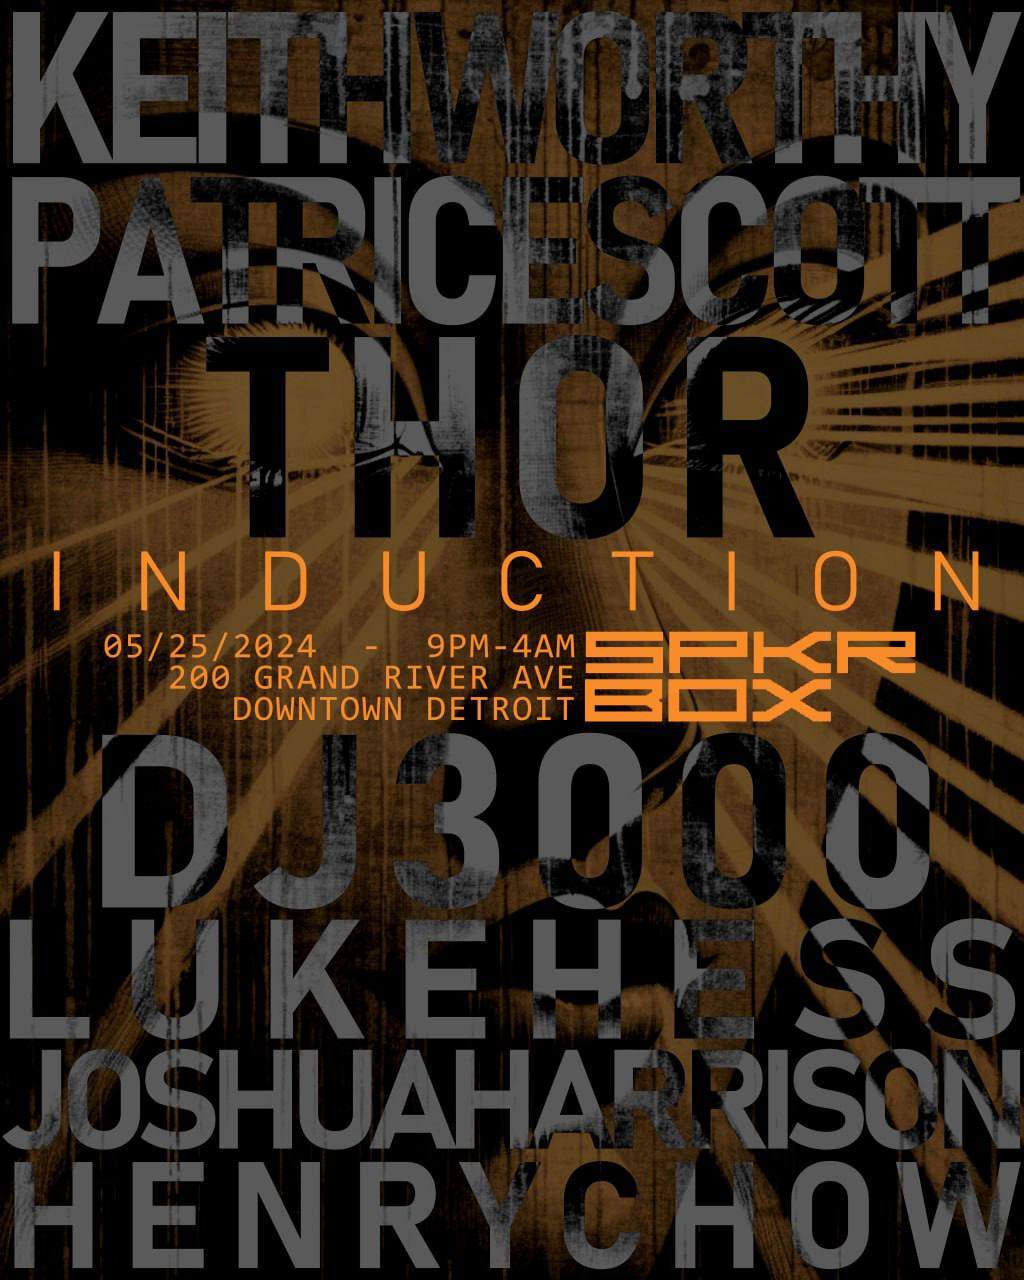 INDUCTION - Keith Worthy, Patrice Scott, Thor, DJ 3000, Luke Hess, Joshua Harrison, Henry Chow - フライヤー表